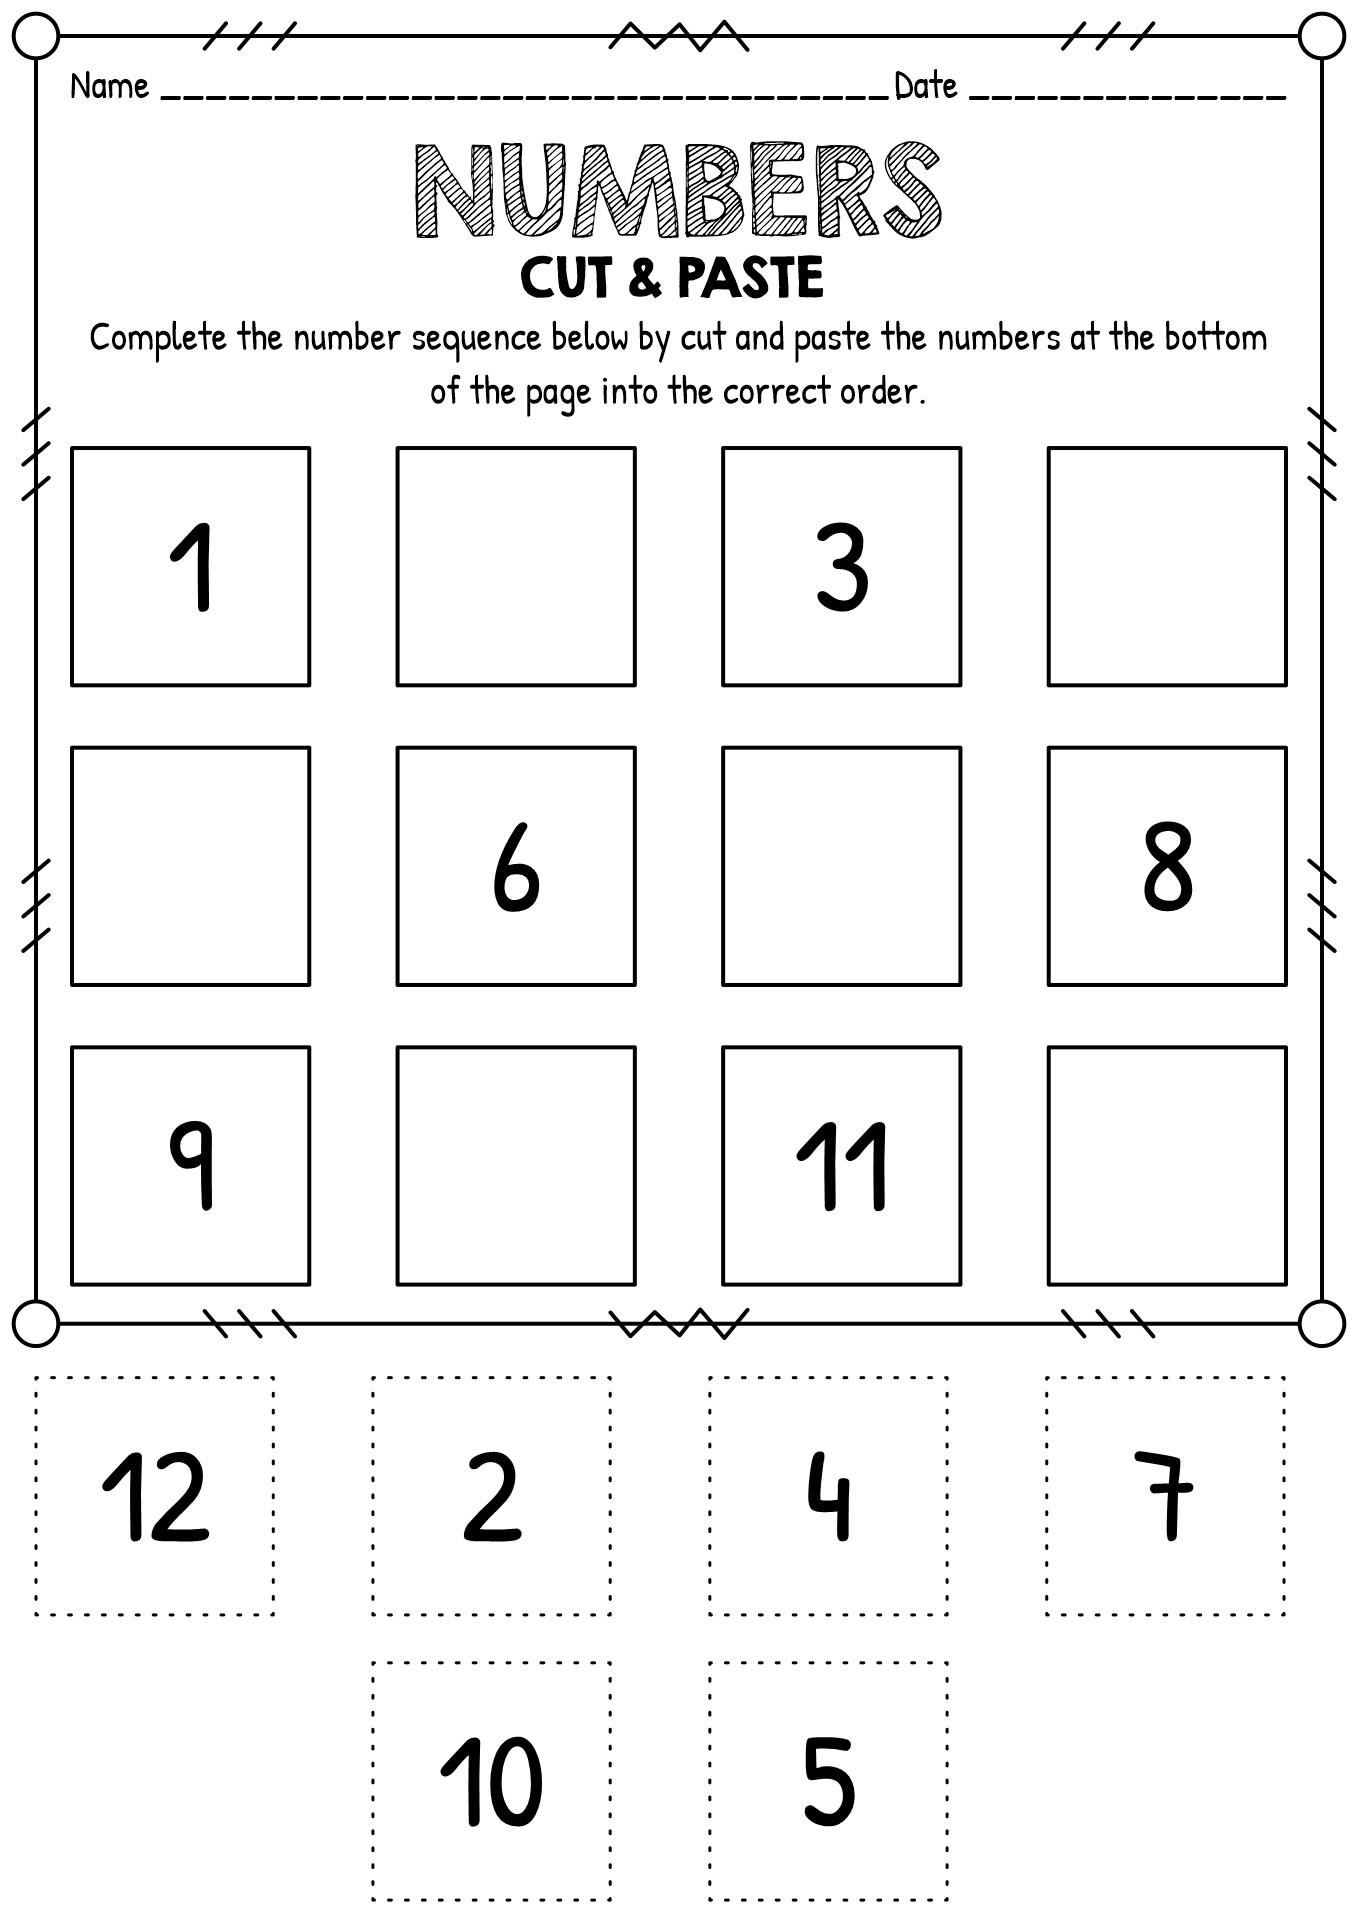 Kindergarten Cut and Paste Numbers Image